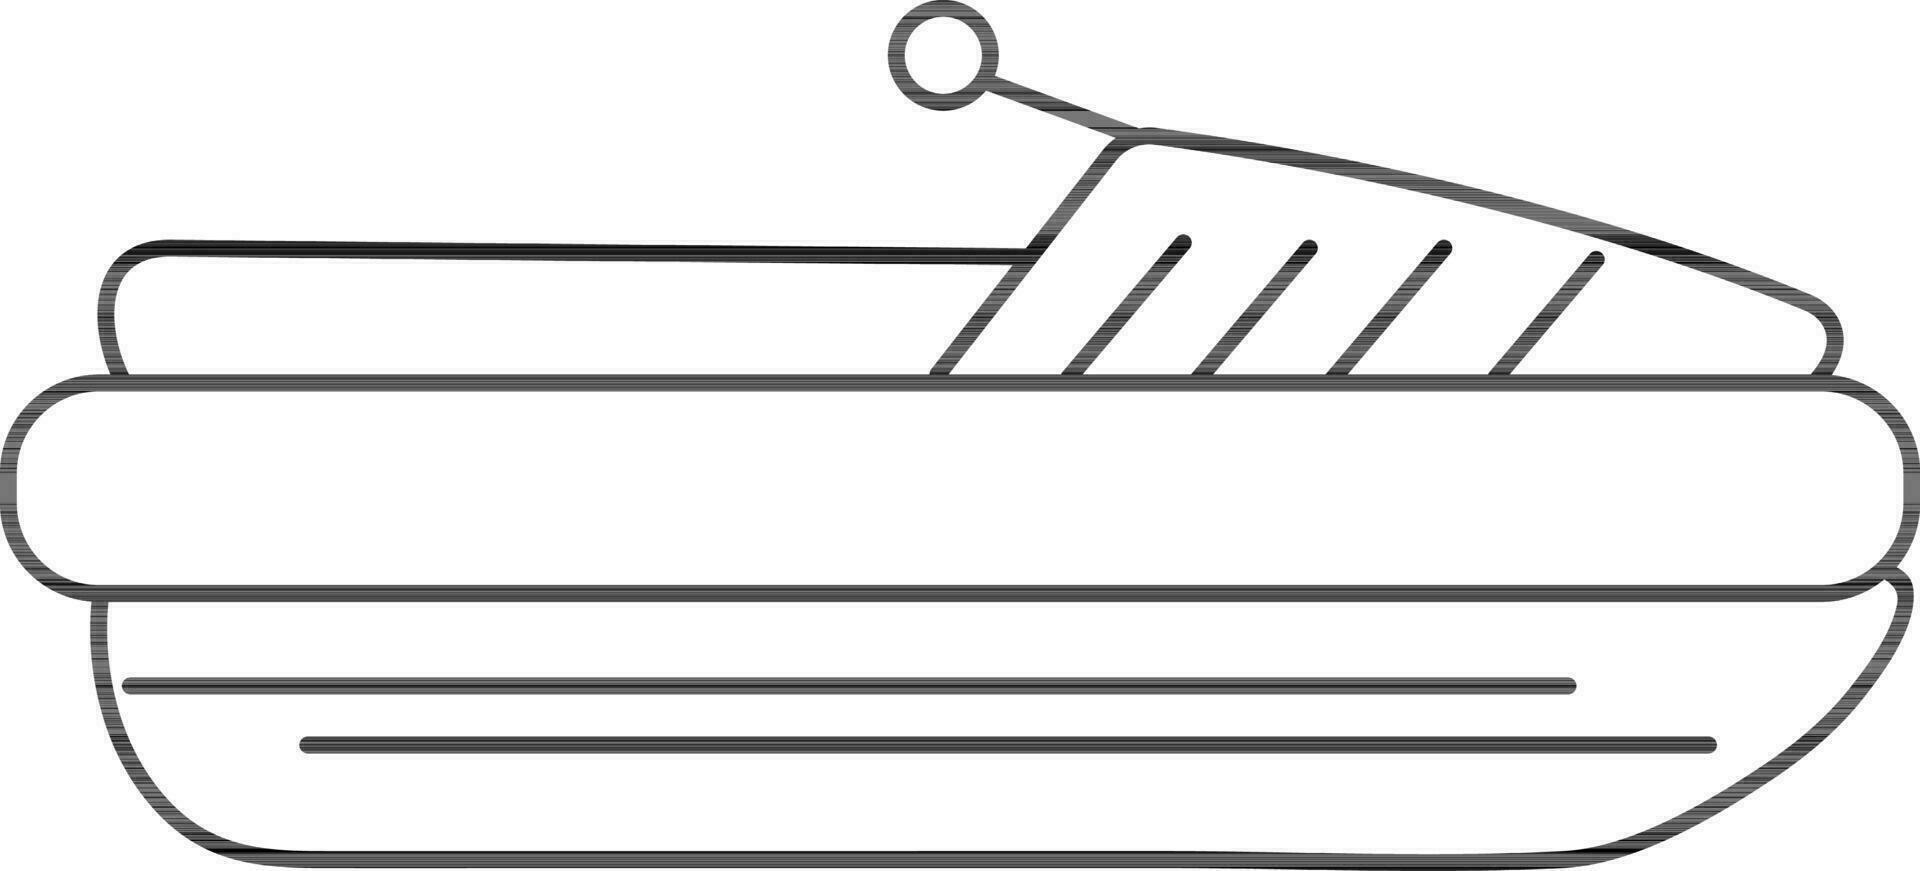 linje konst illustration av jet åka skidor symbol. vektor